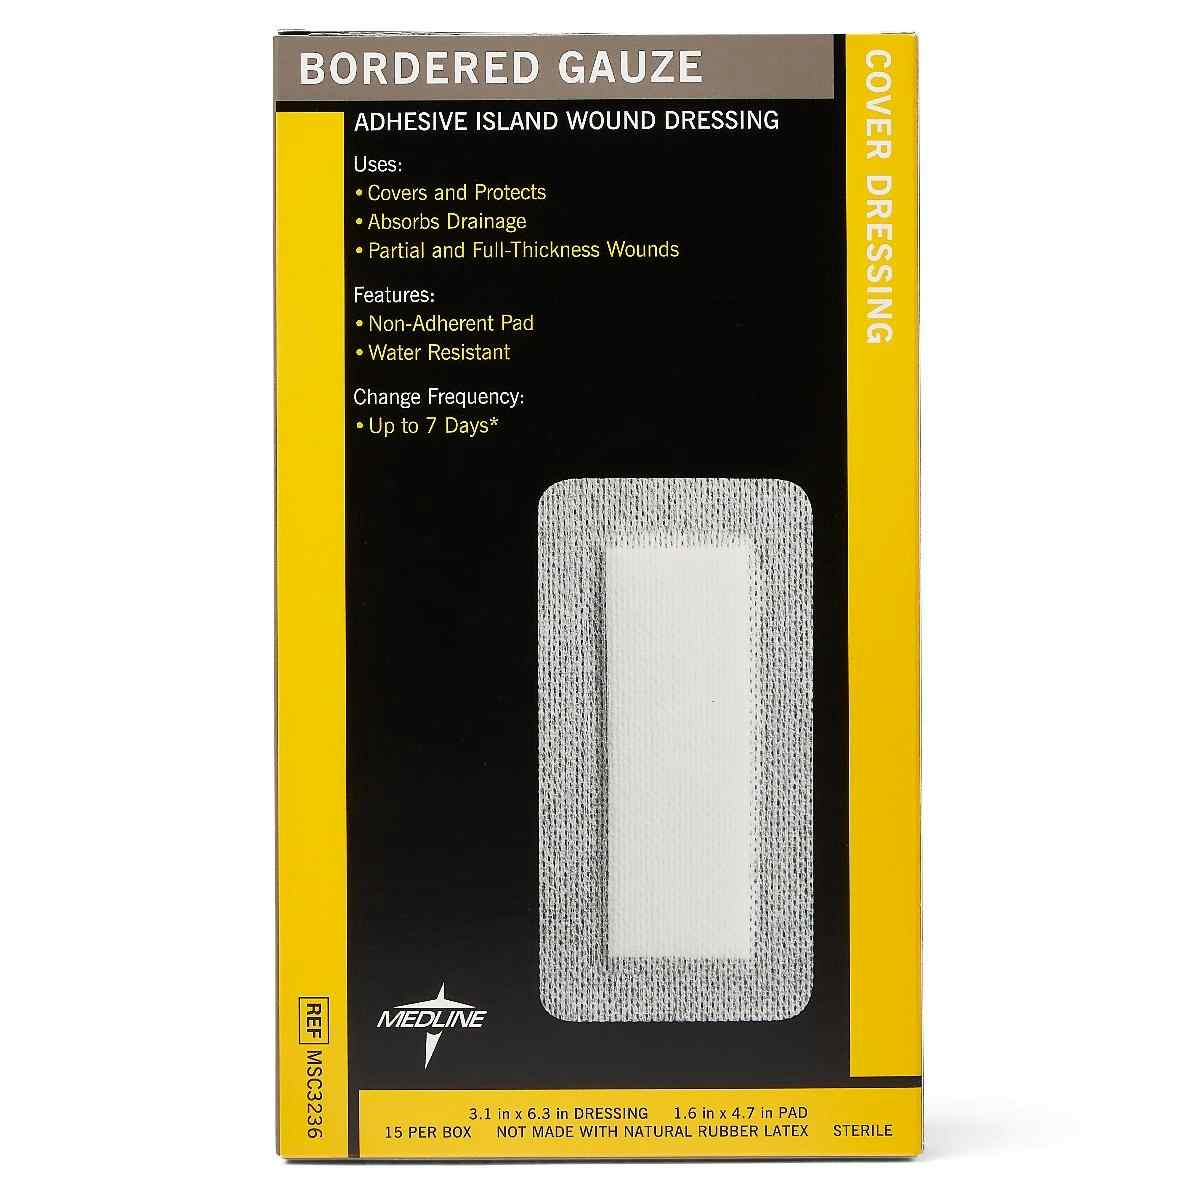 Medline Bordered Gauze Adhesive Island Wound Dressing, MSC3236Z, 3" X 6" with 1.5" X 4" Pad - Box of 15